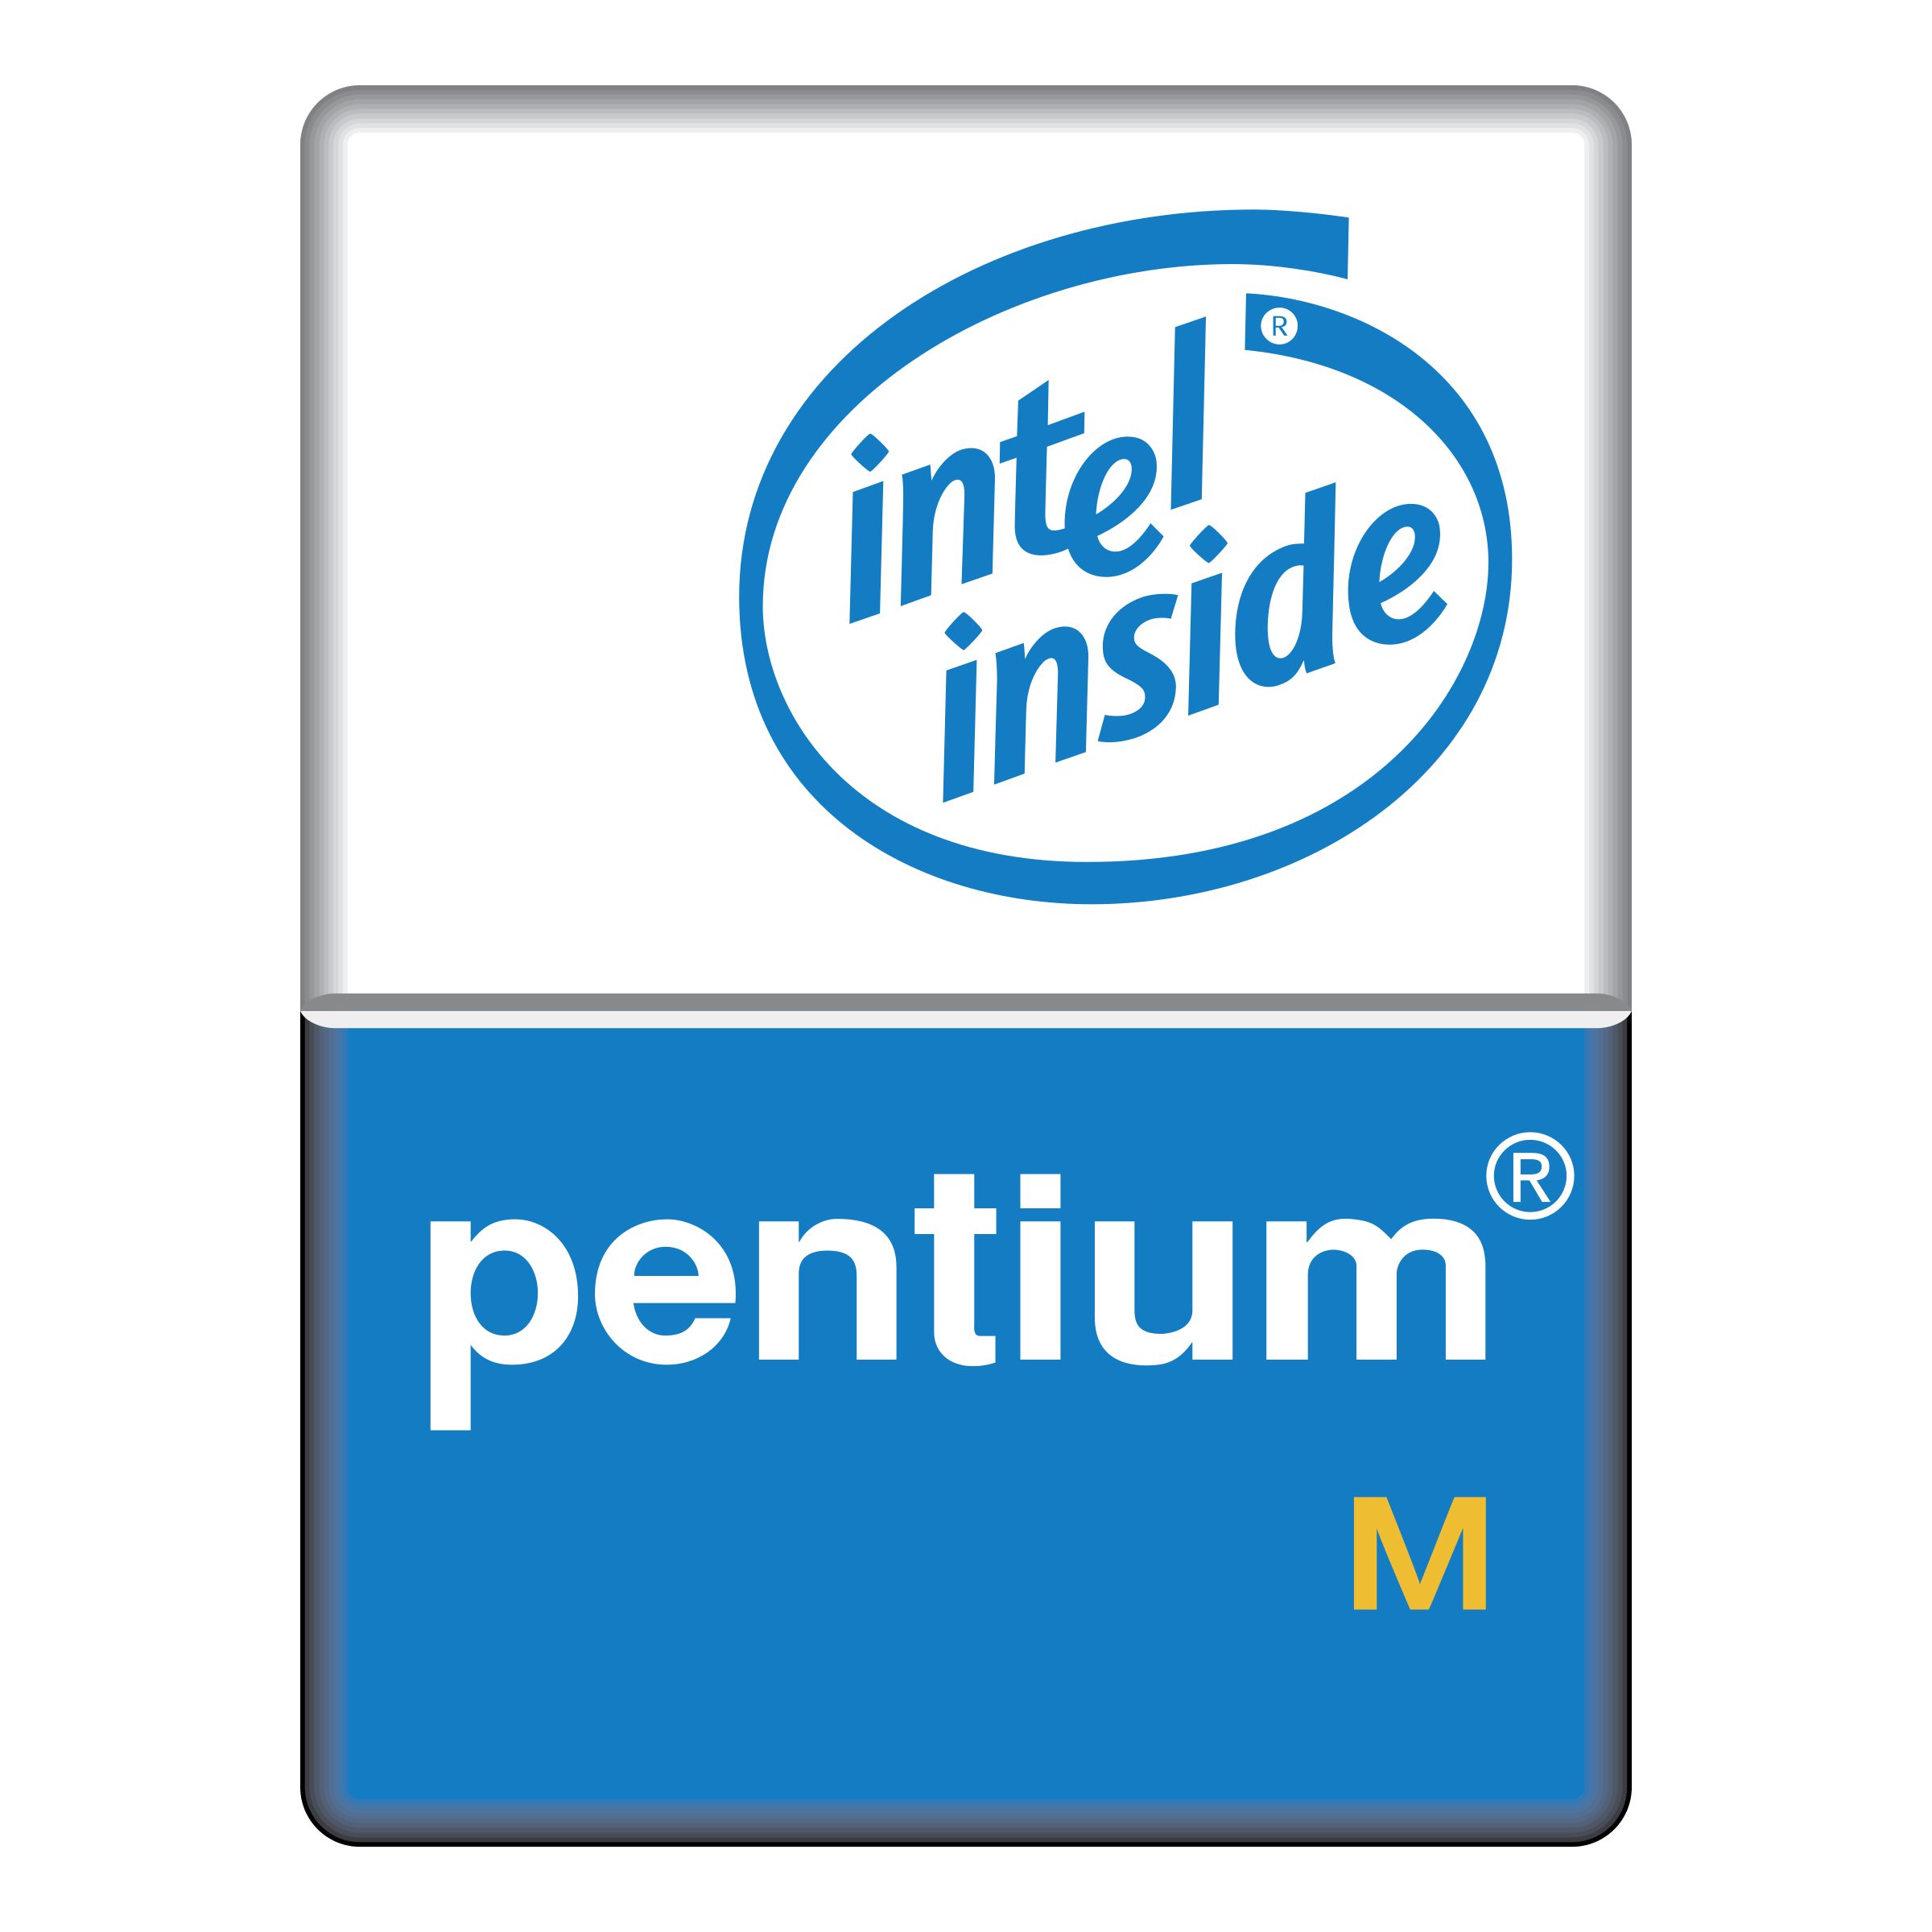 Intel Pentium Processor Logo - Pentium M Processor Logo PNG Transparent & SVG Vector - Freebie Supply